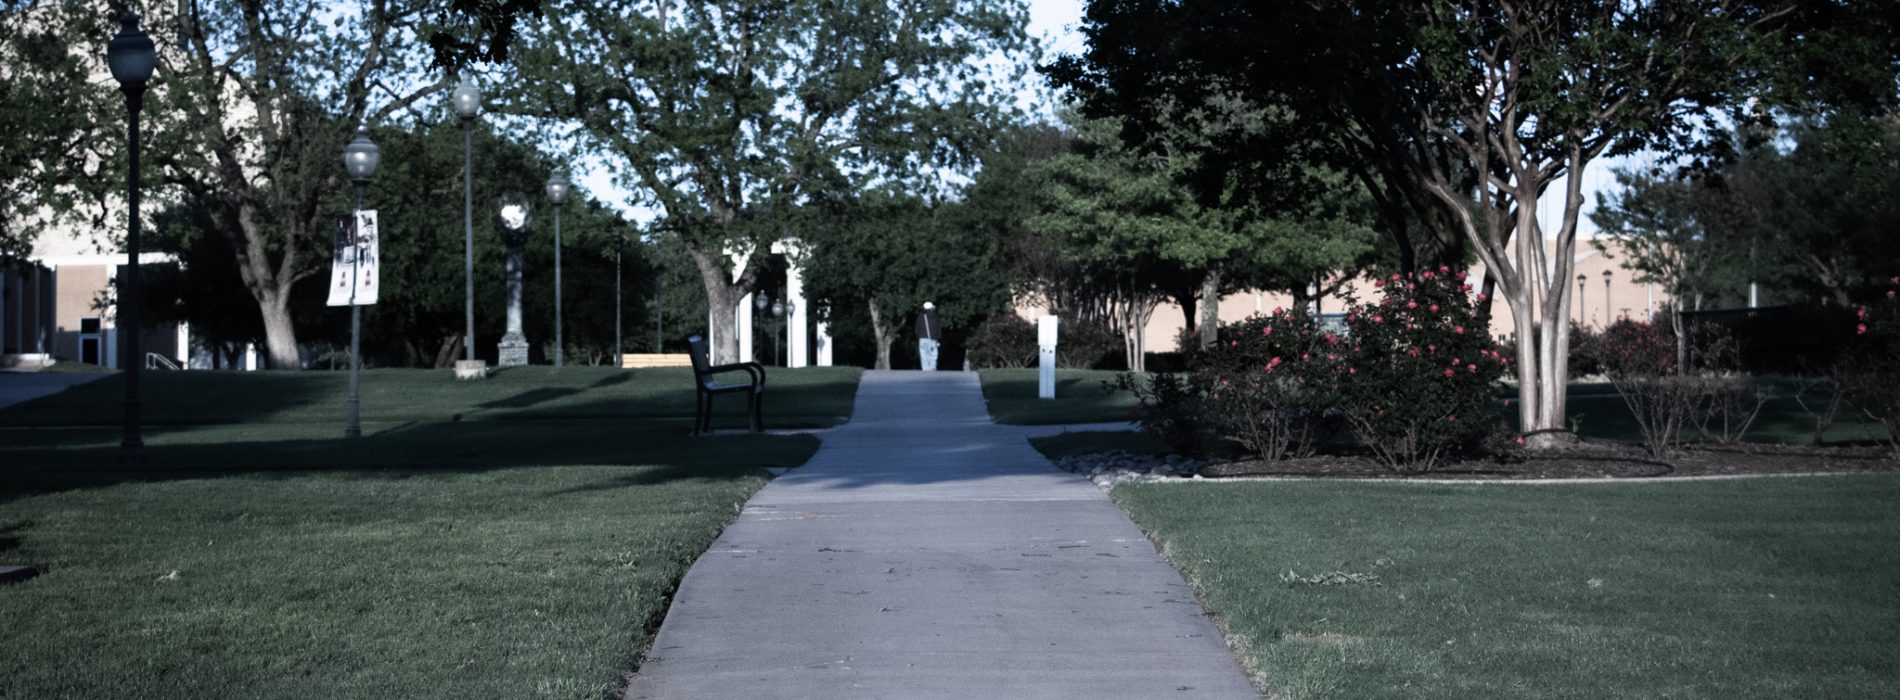 Empty Campus: Photo Essay